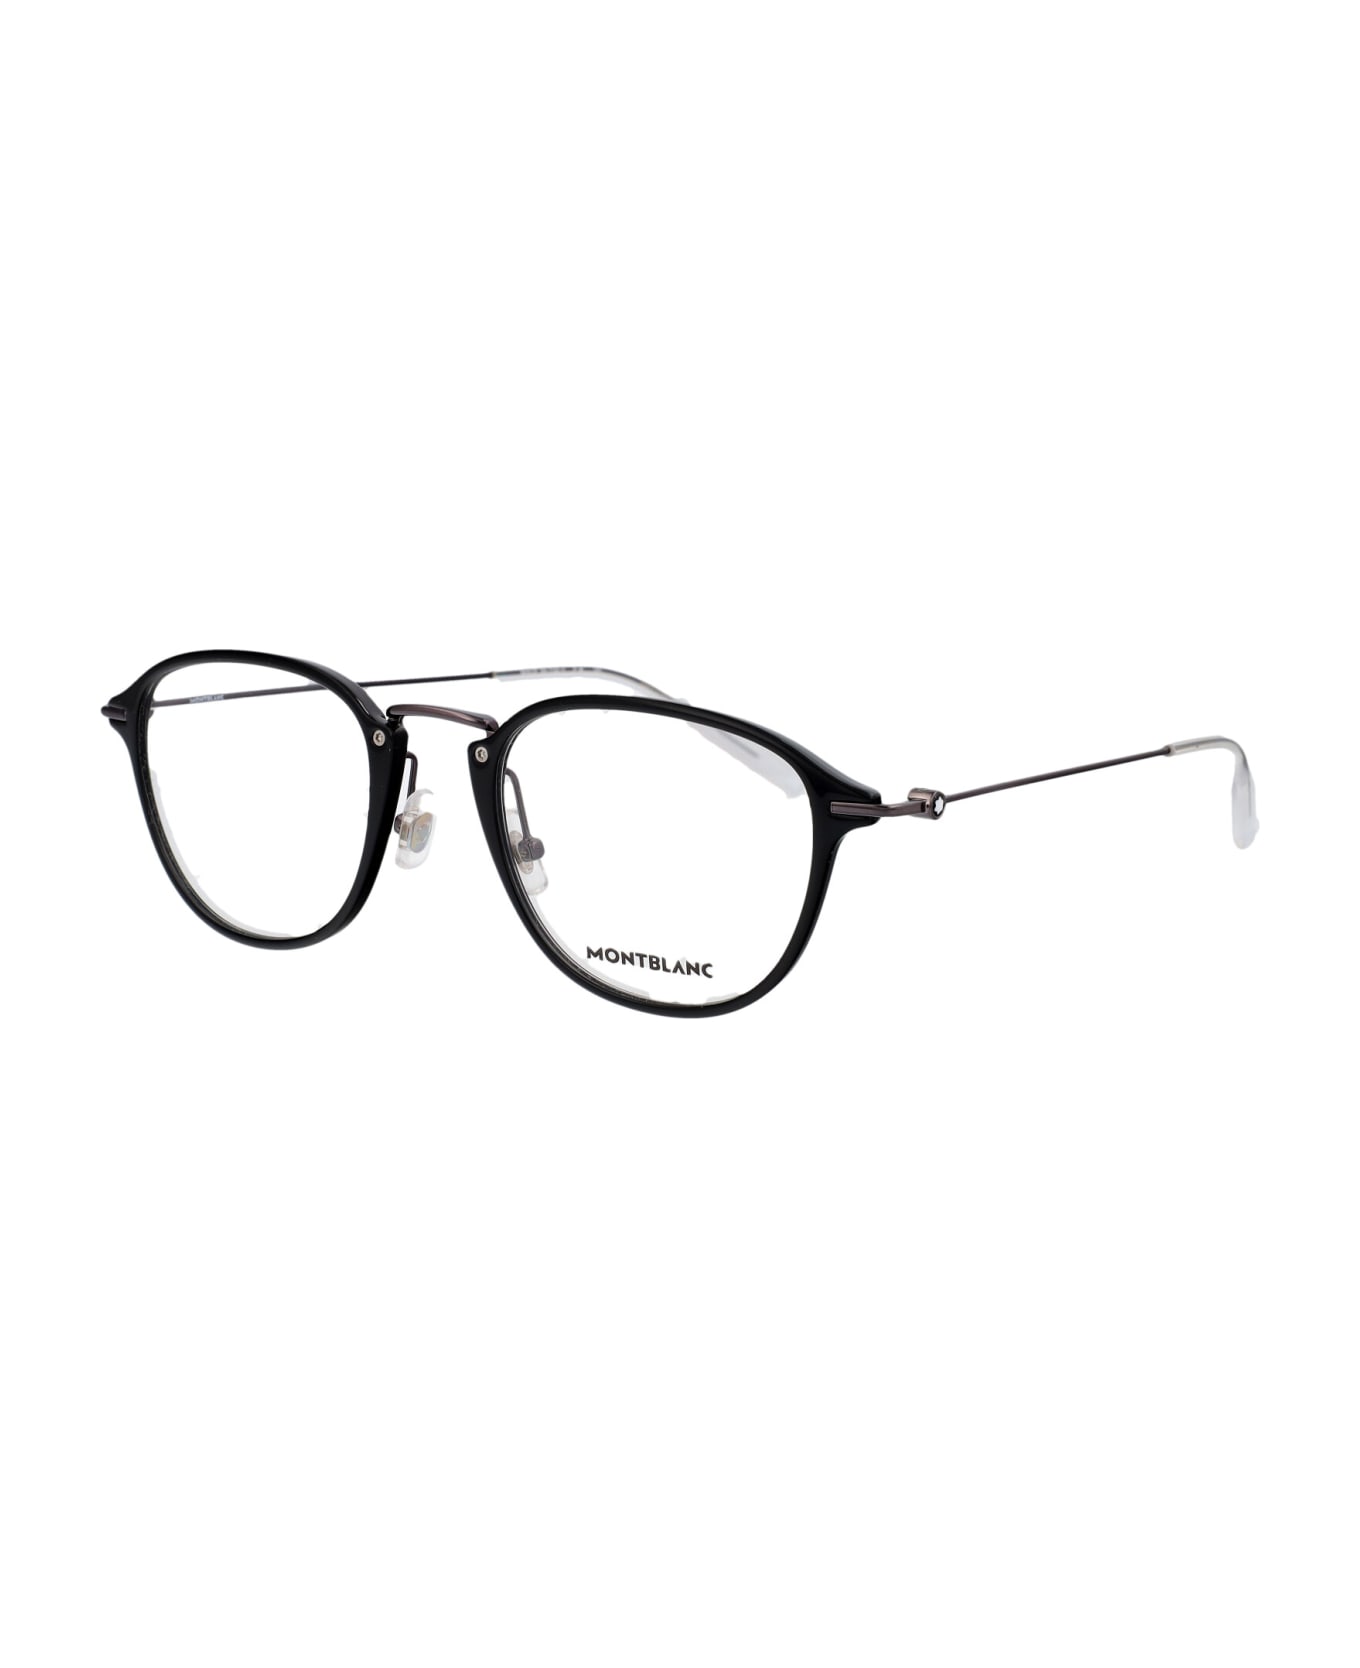 Montblanc Mb0155o Glasses - 007 BLACK RUTHENIUM TRANSPARENT